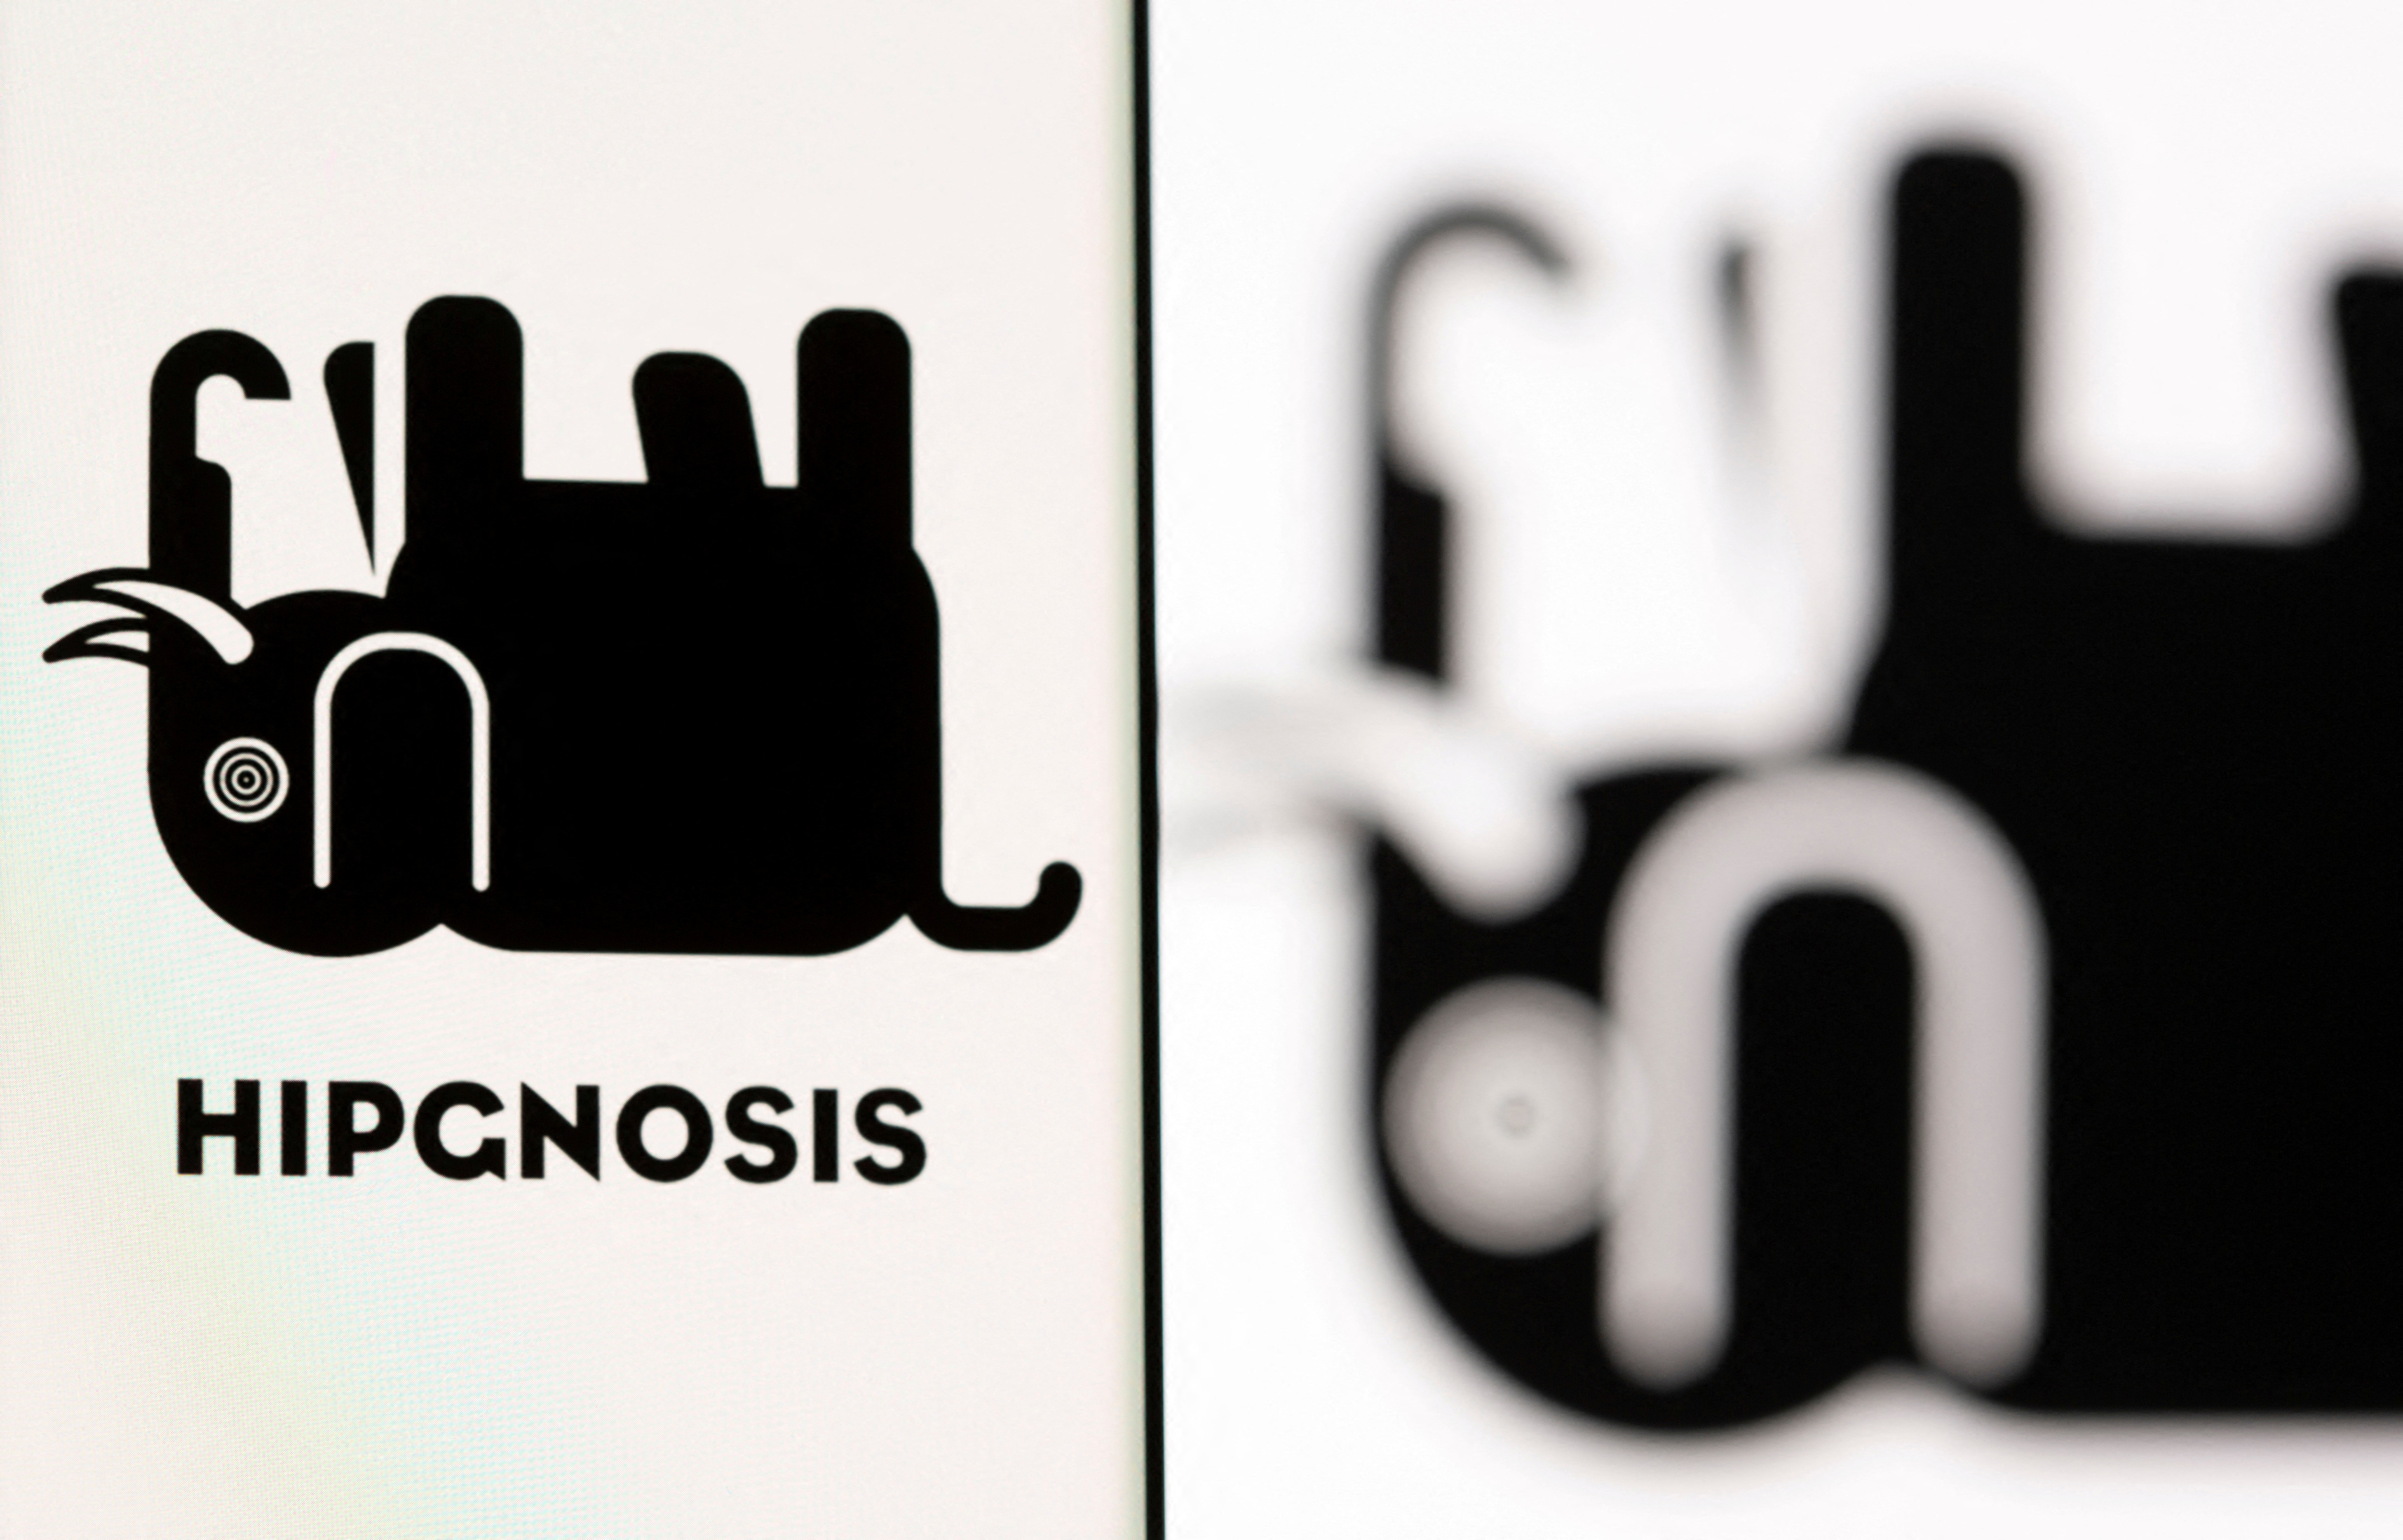 Hipgnosis logos